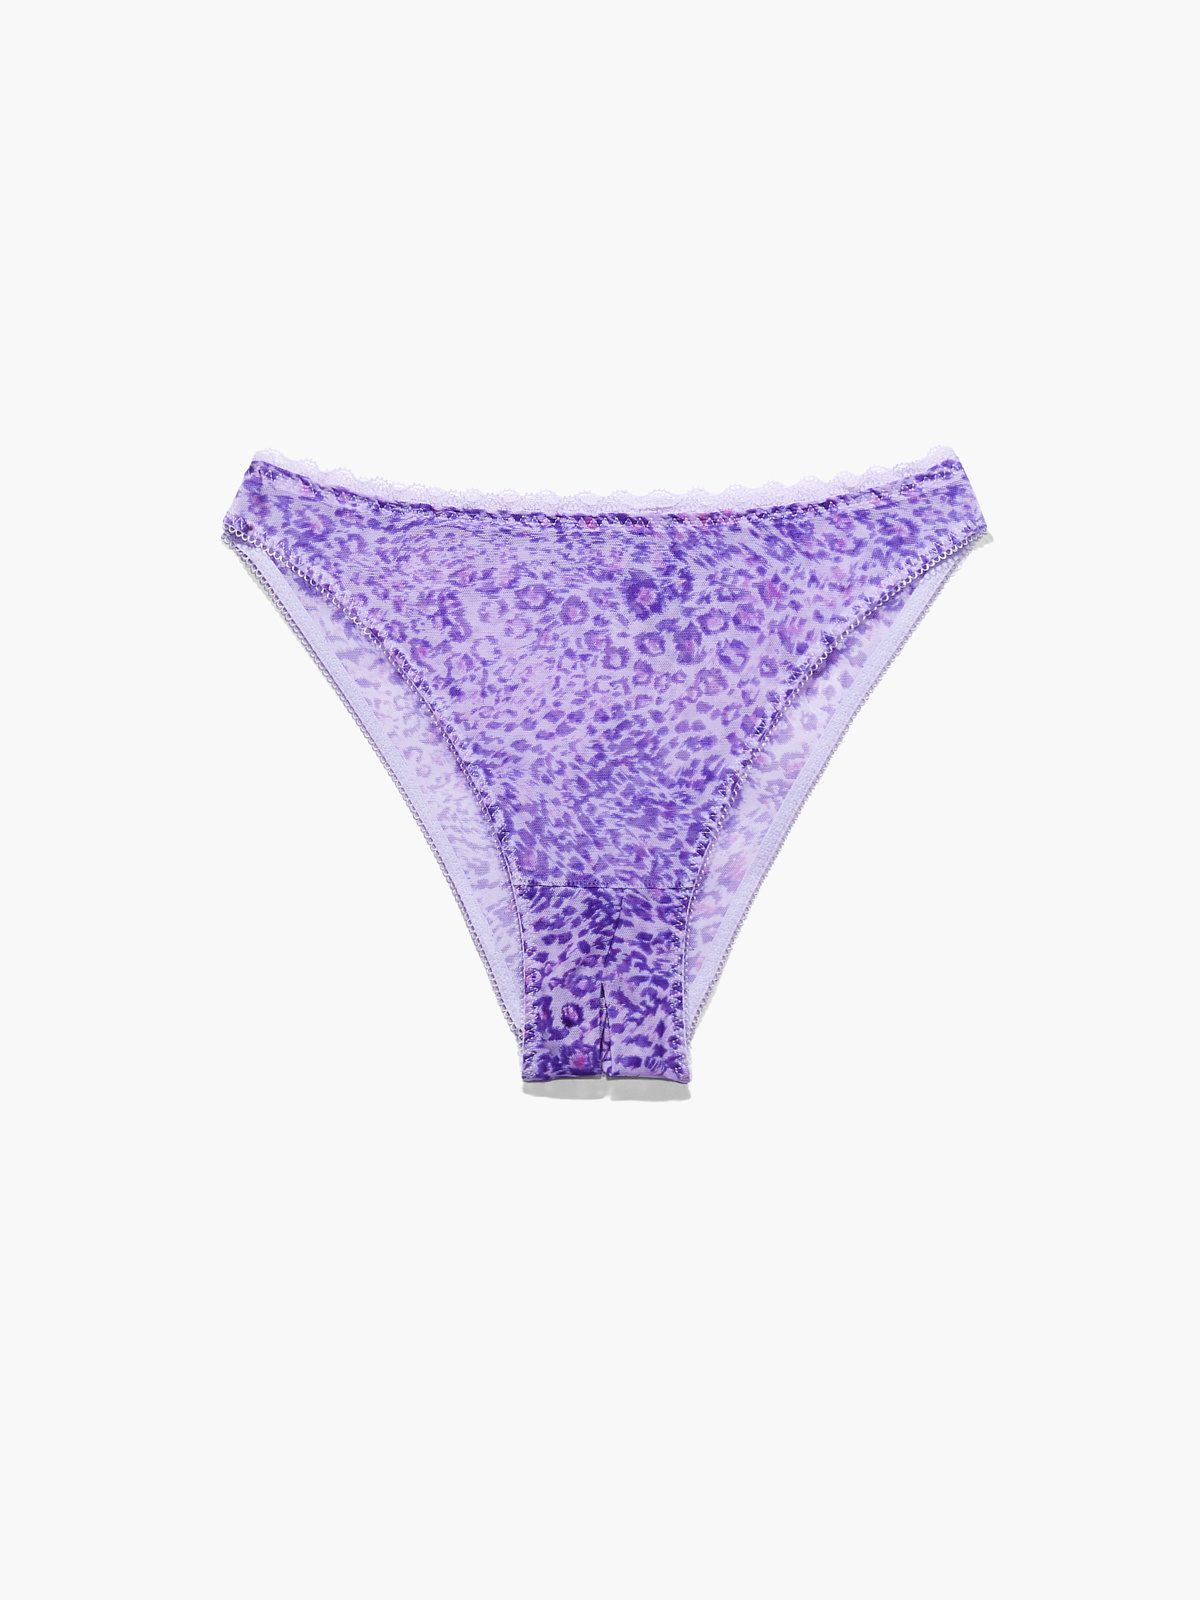 Mesh Crotchless High-Leg Bikini in Multi & Purple | SAVAGE X FENTY